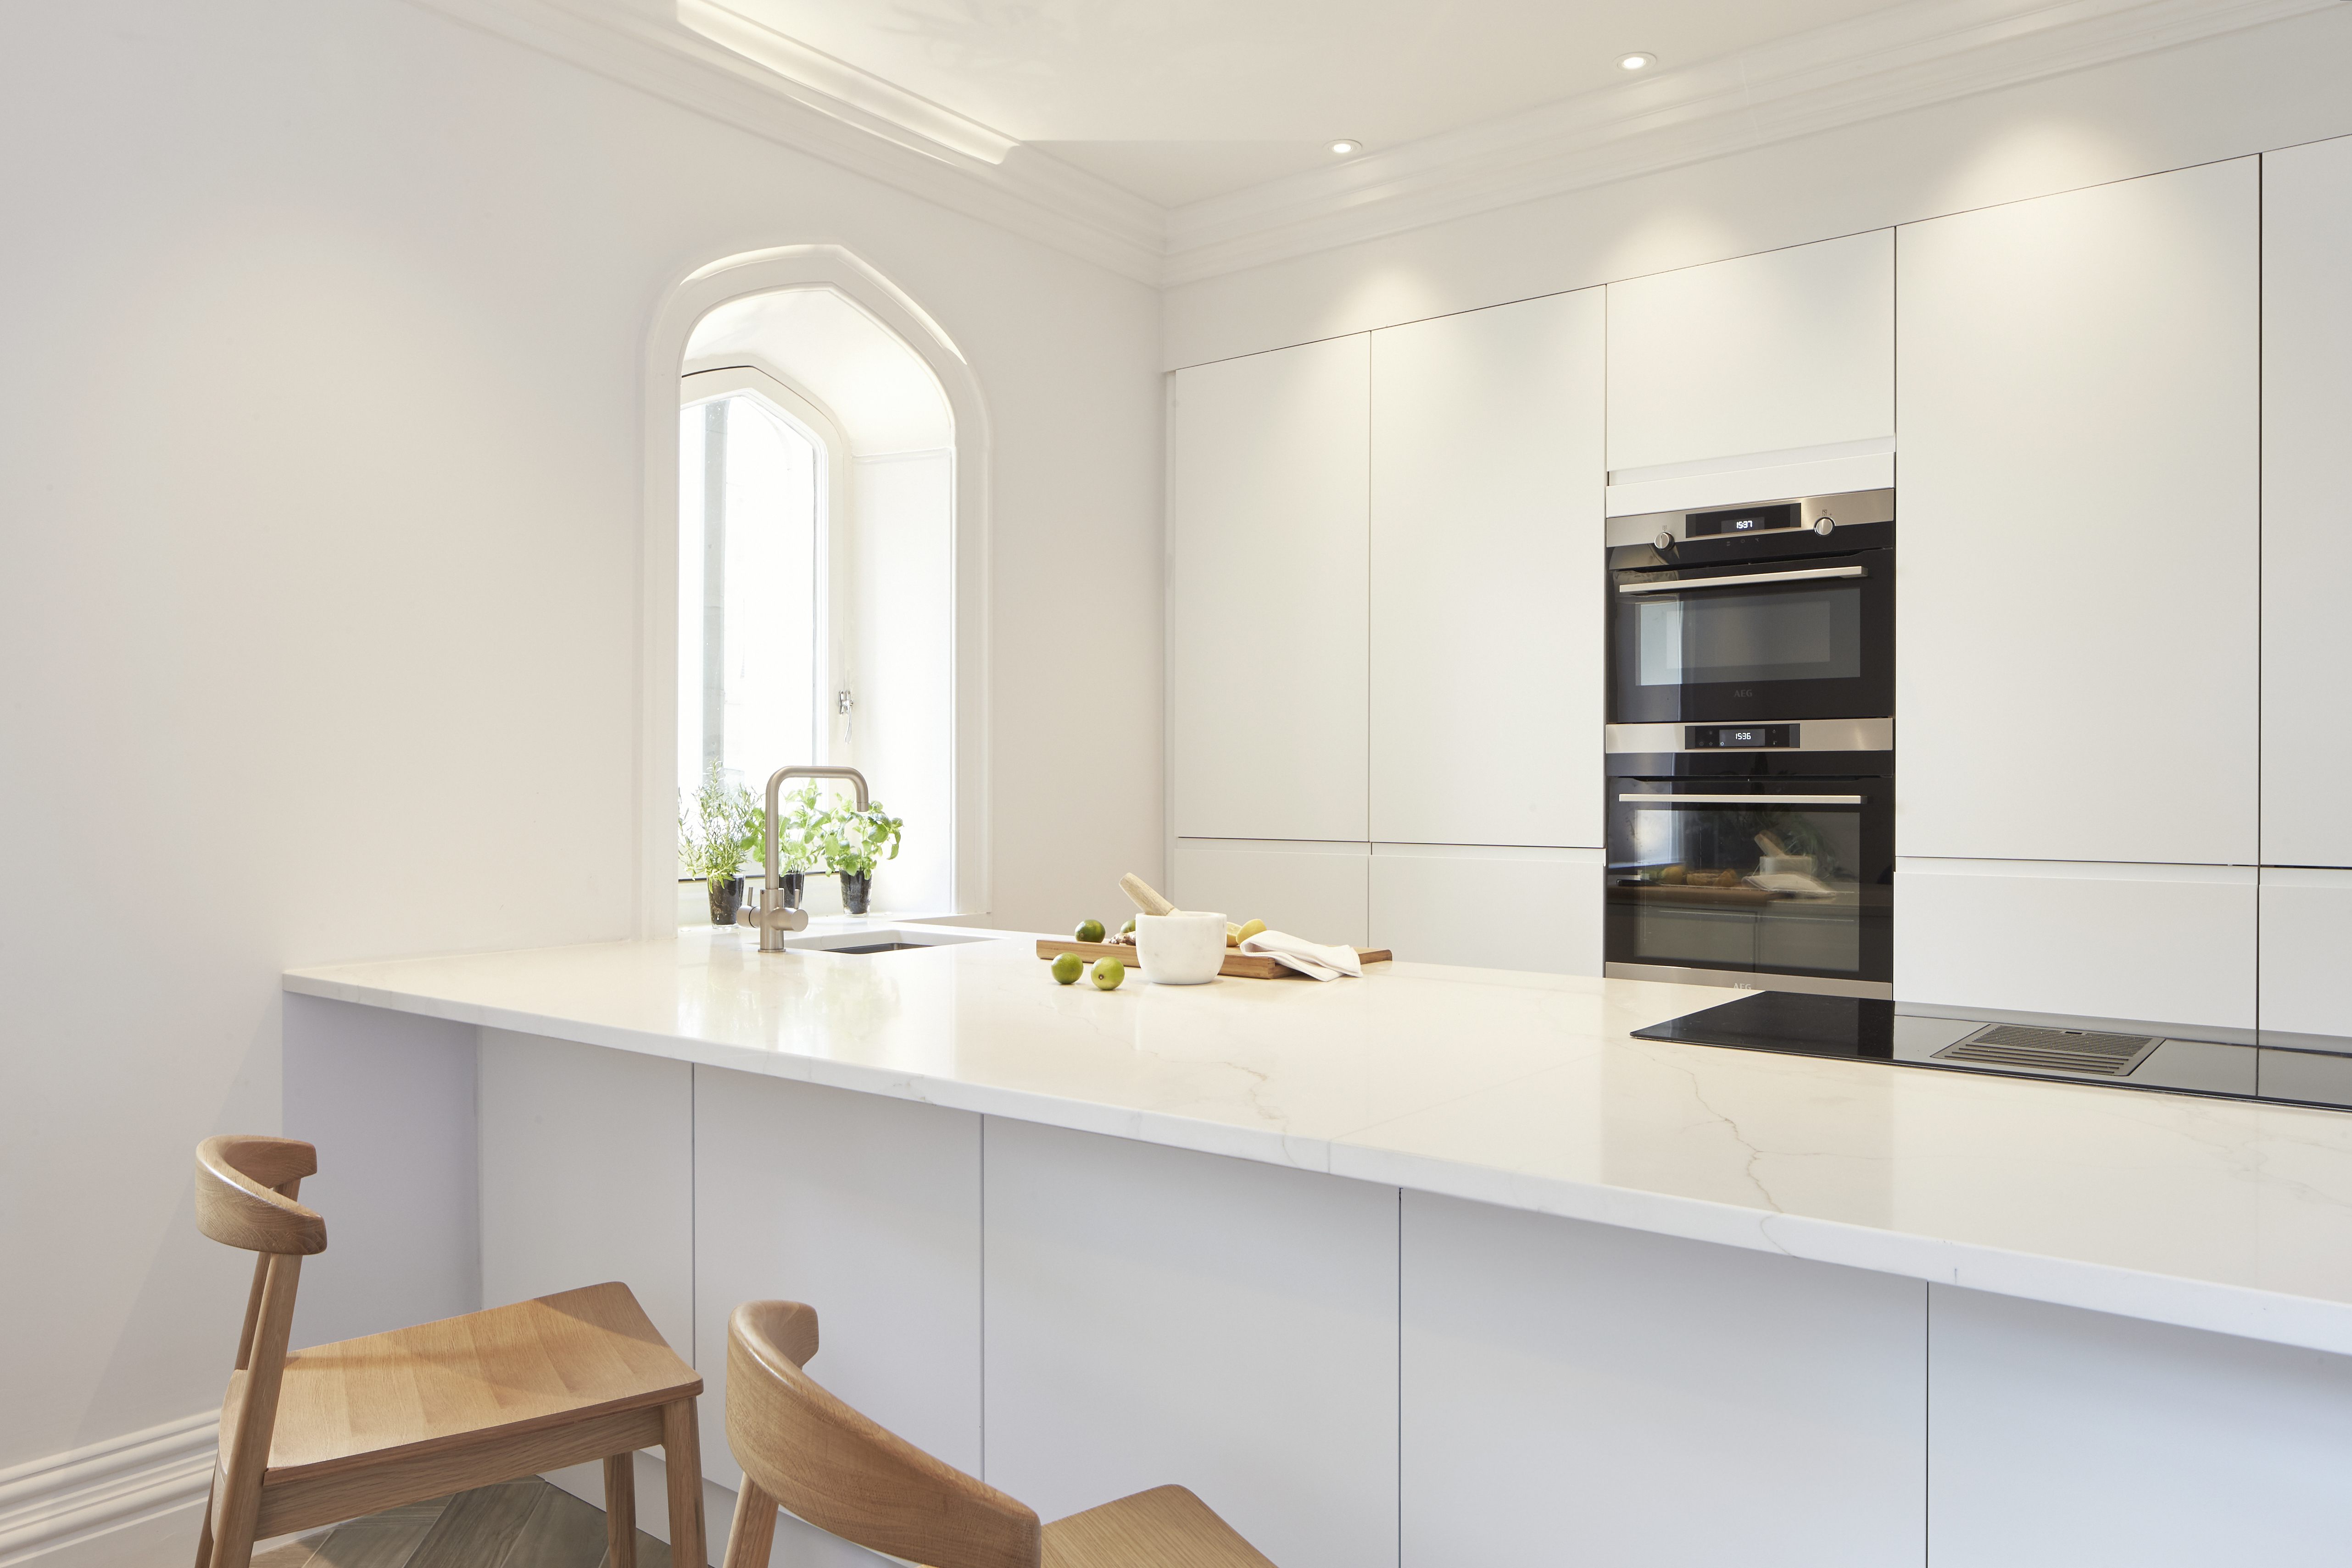 Minimal white kitchen with Scandinavian influence